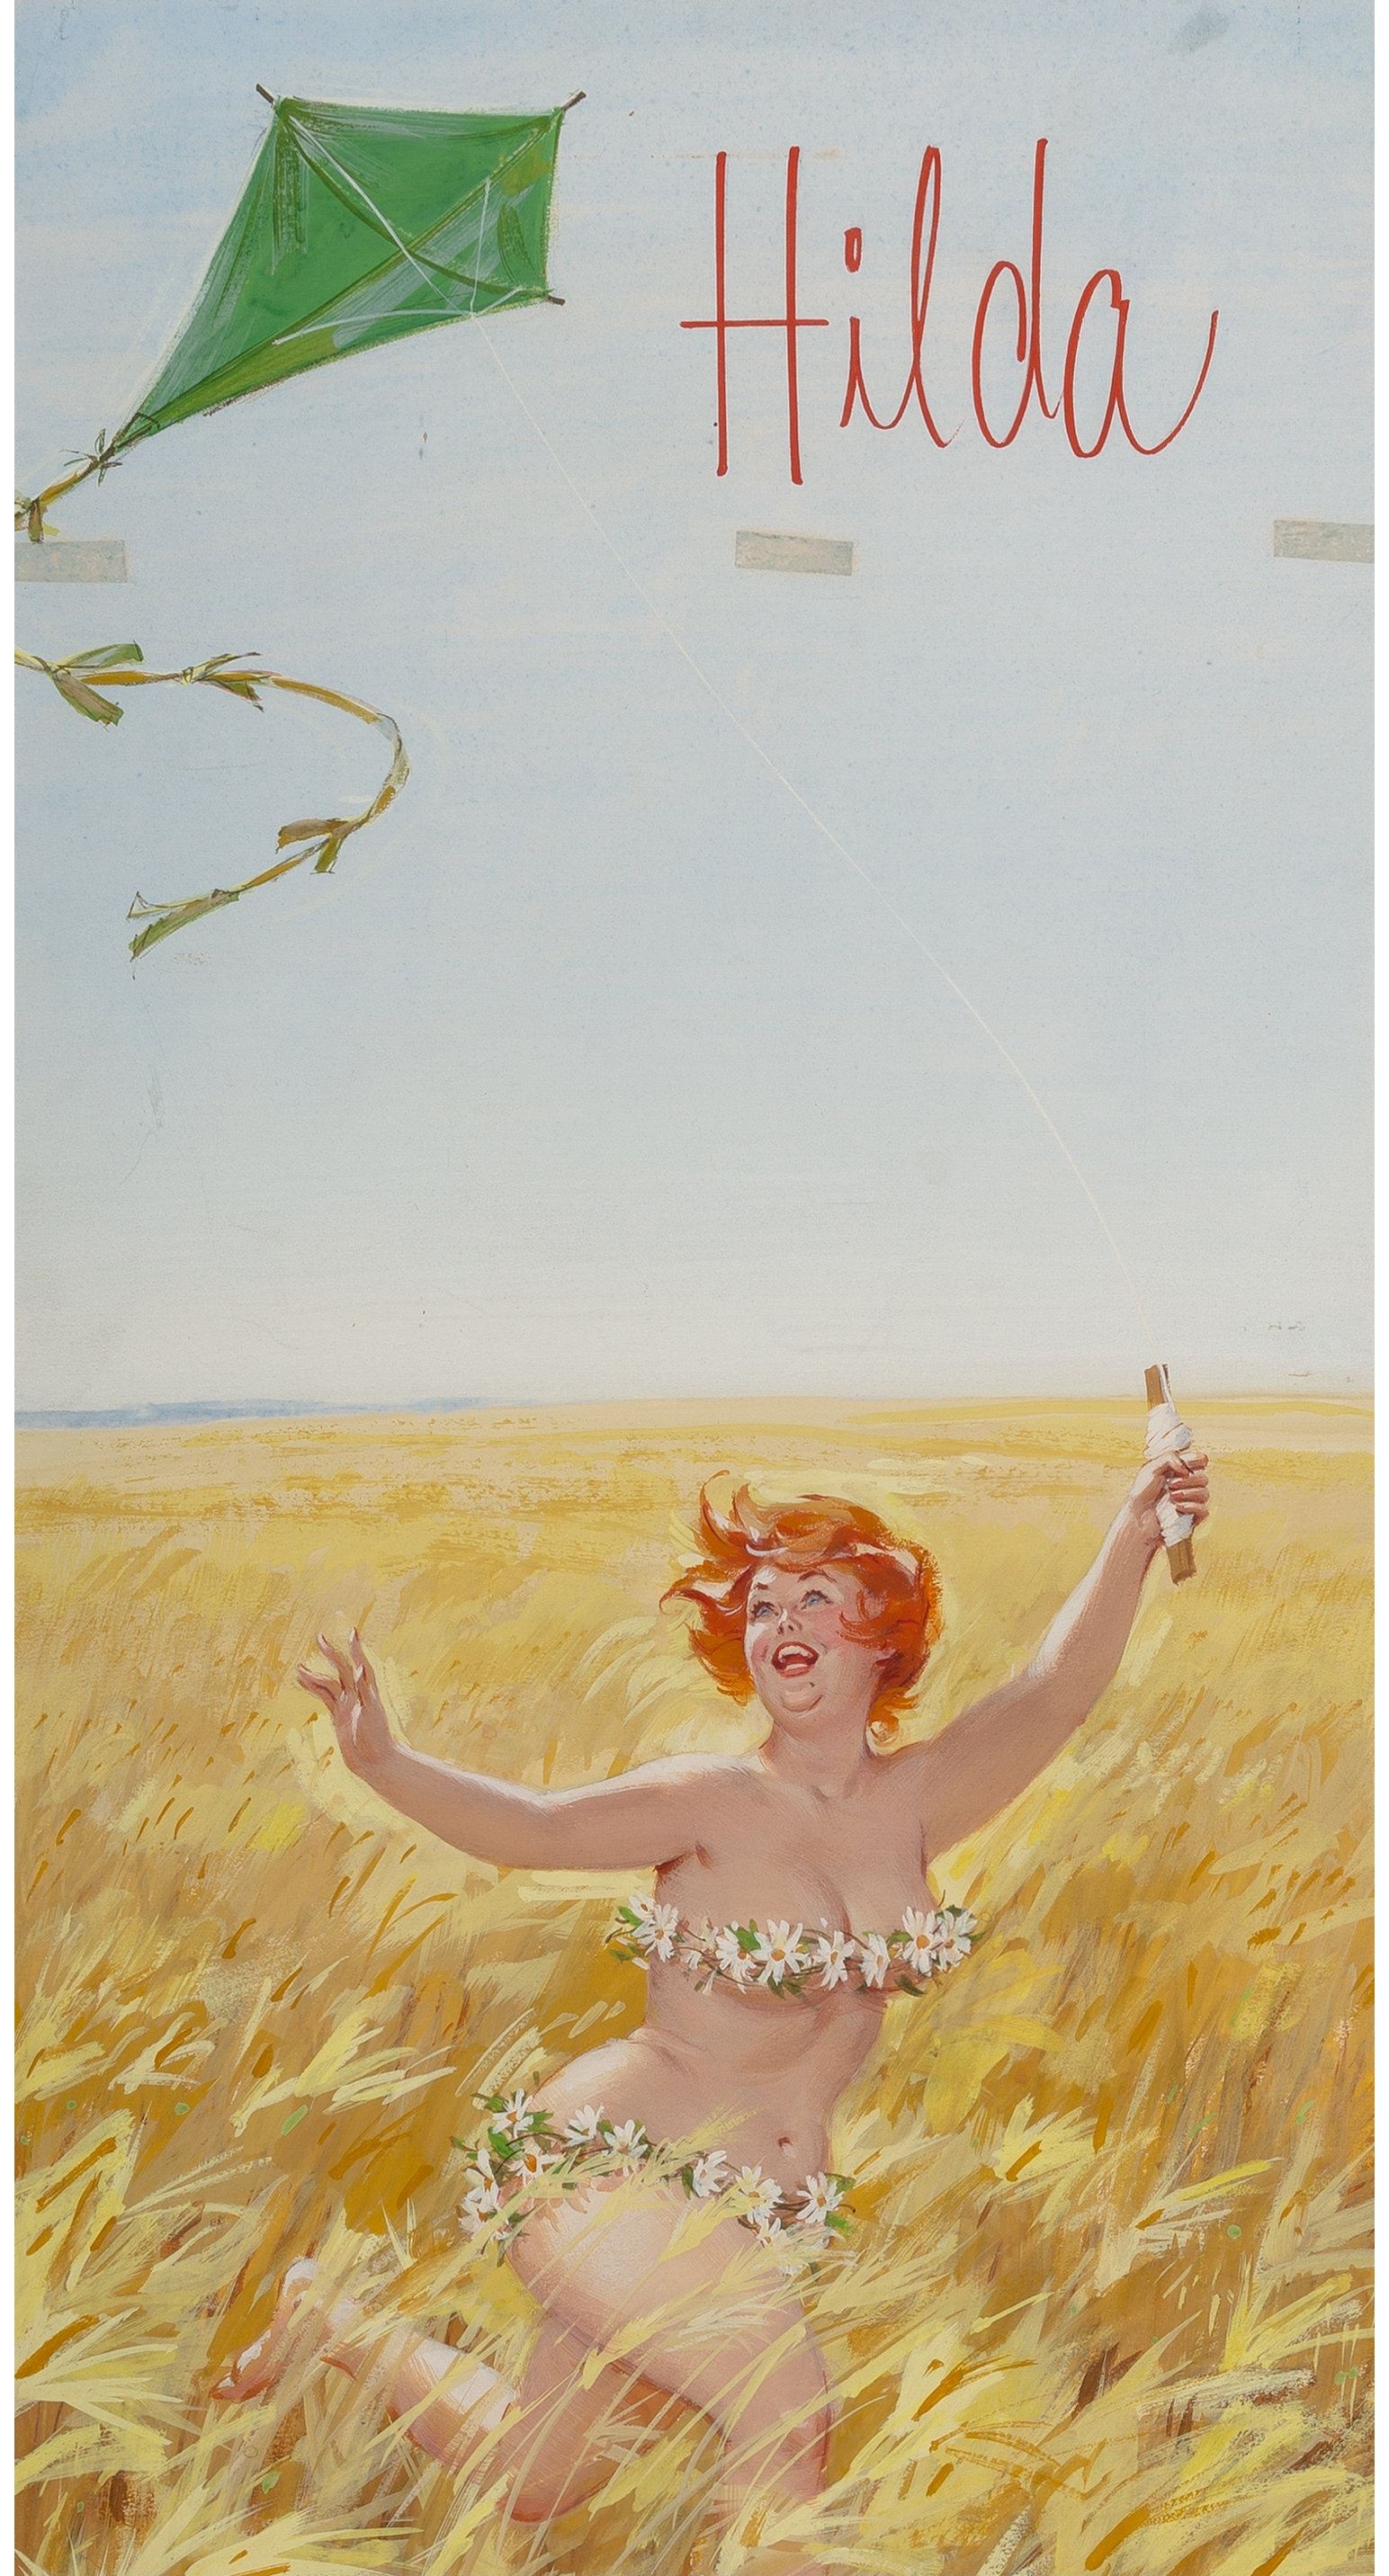 Hilda Flying Kite, Brown & Bigelow calendar illustration by Duane Bryers